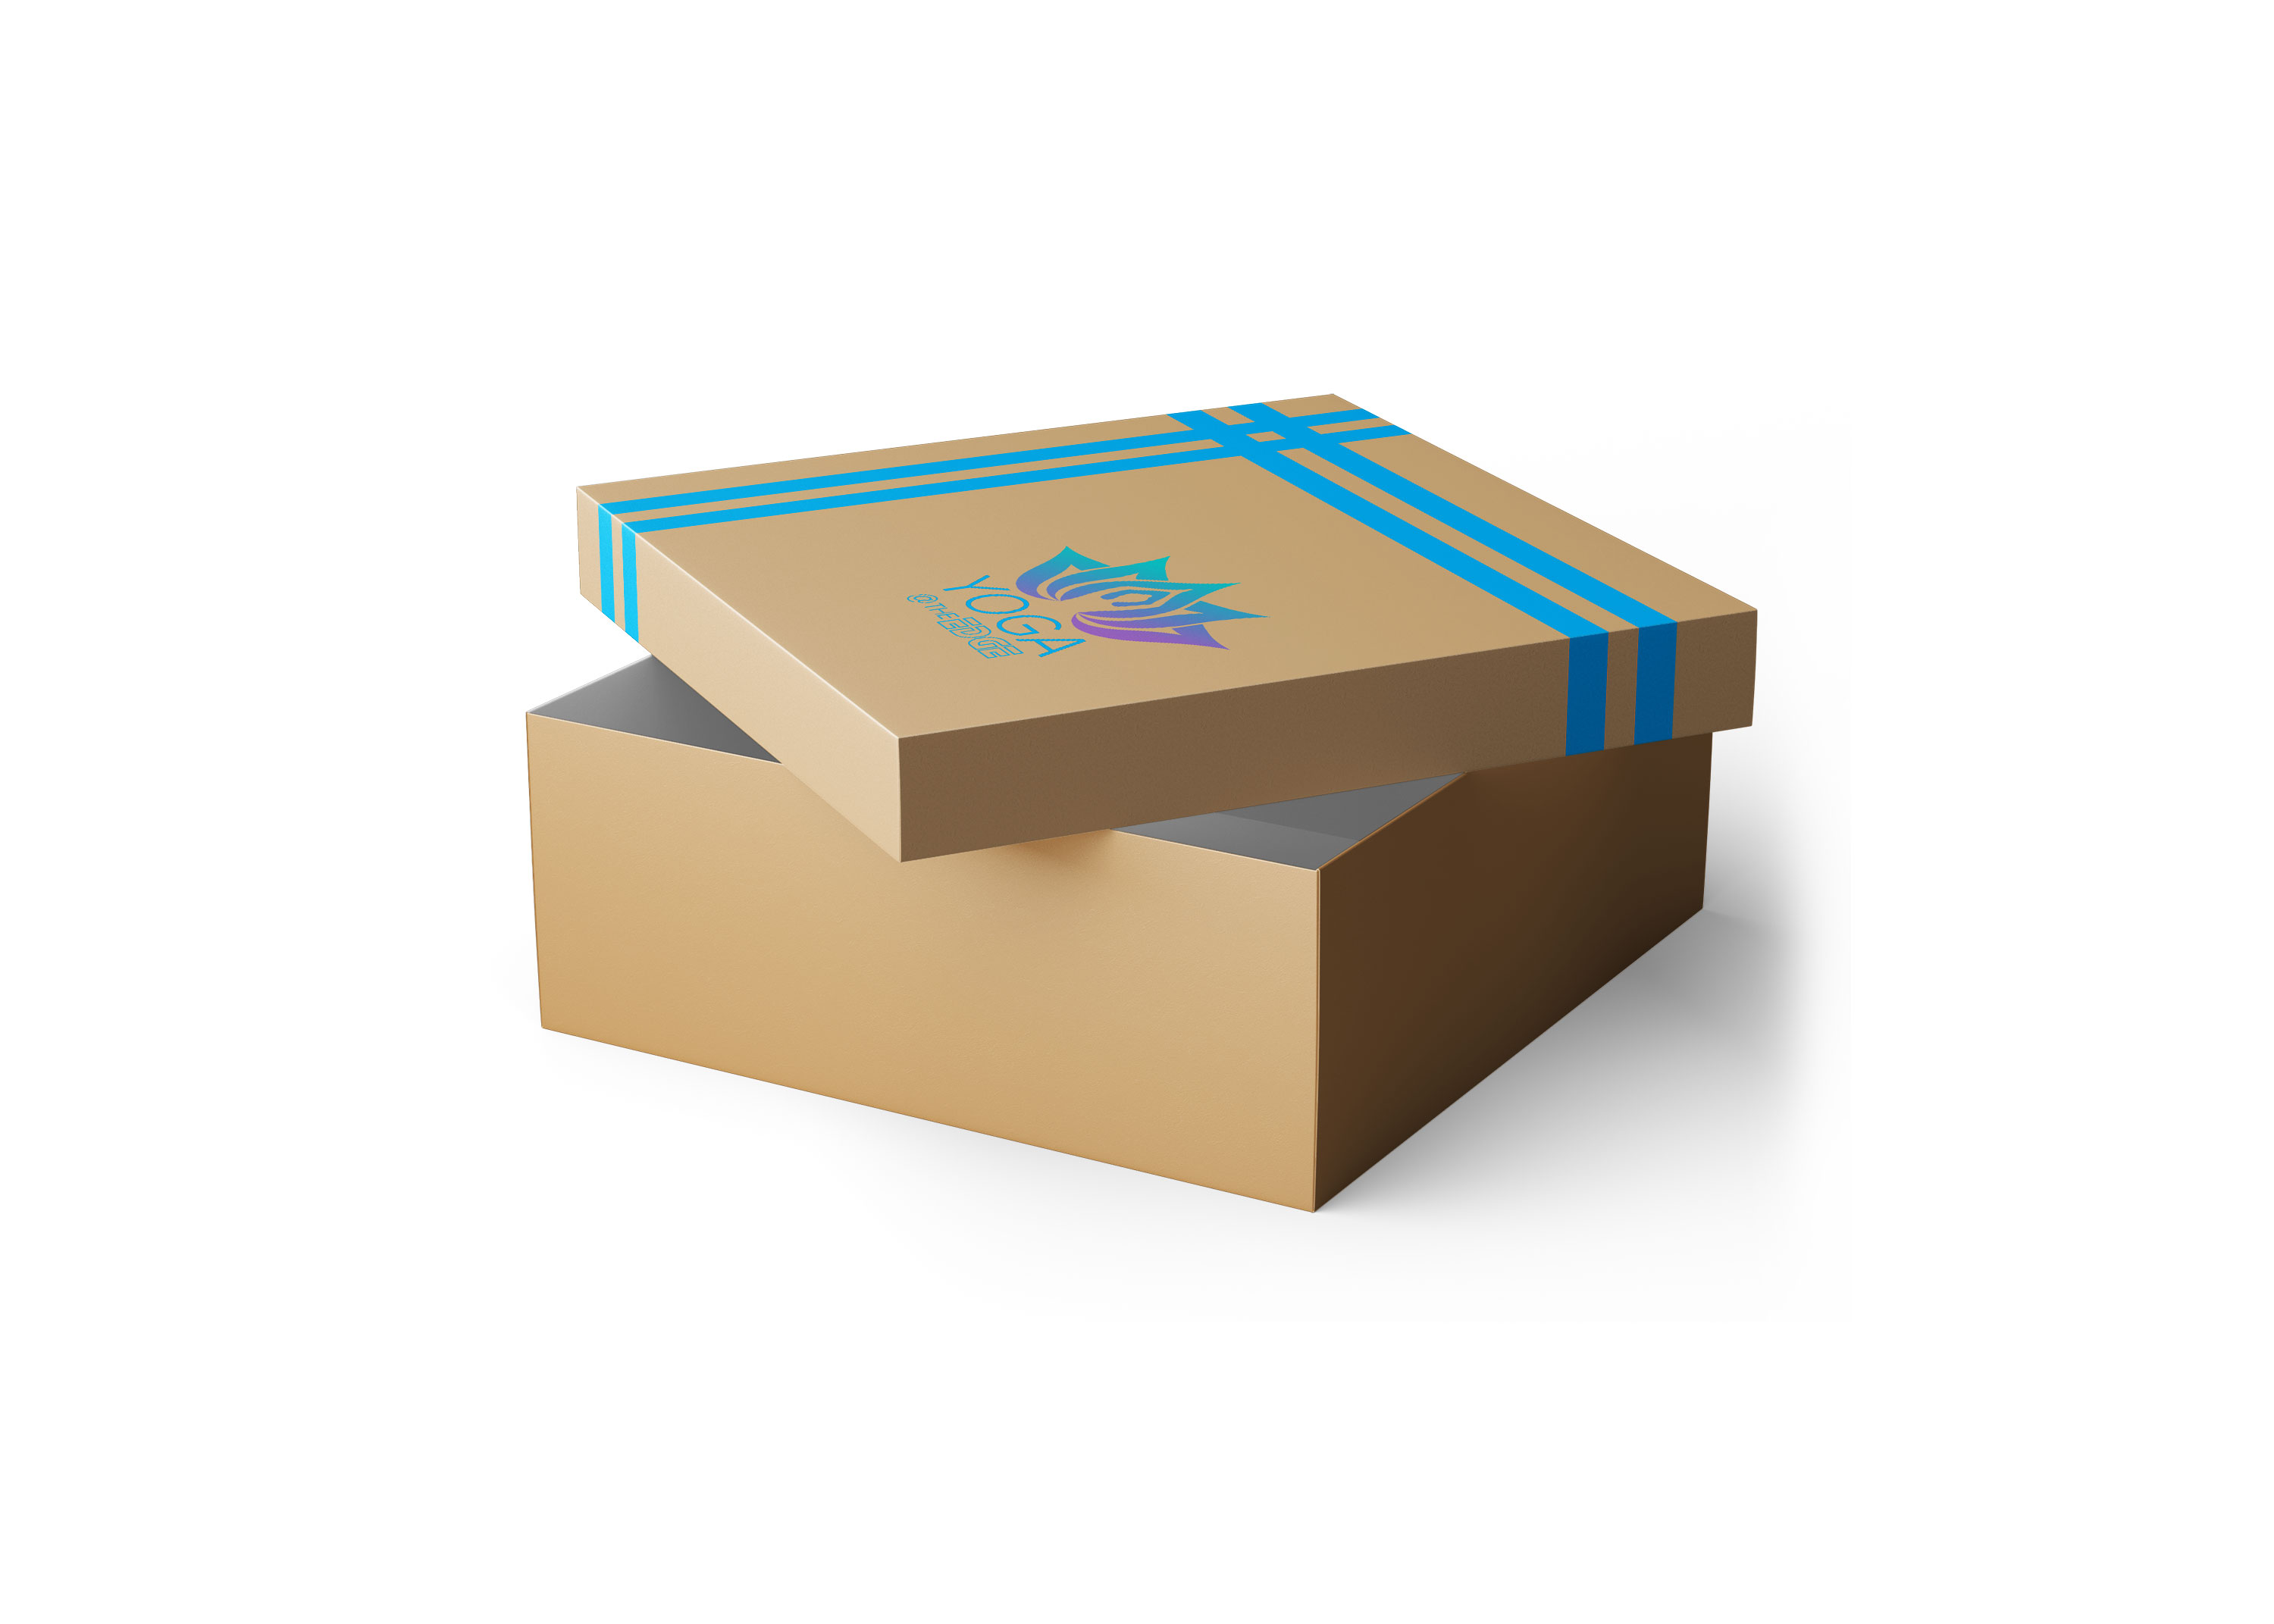 One Design Gift Box PSD Mockup